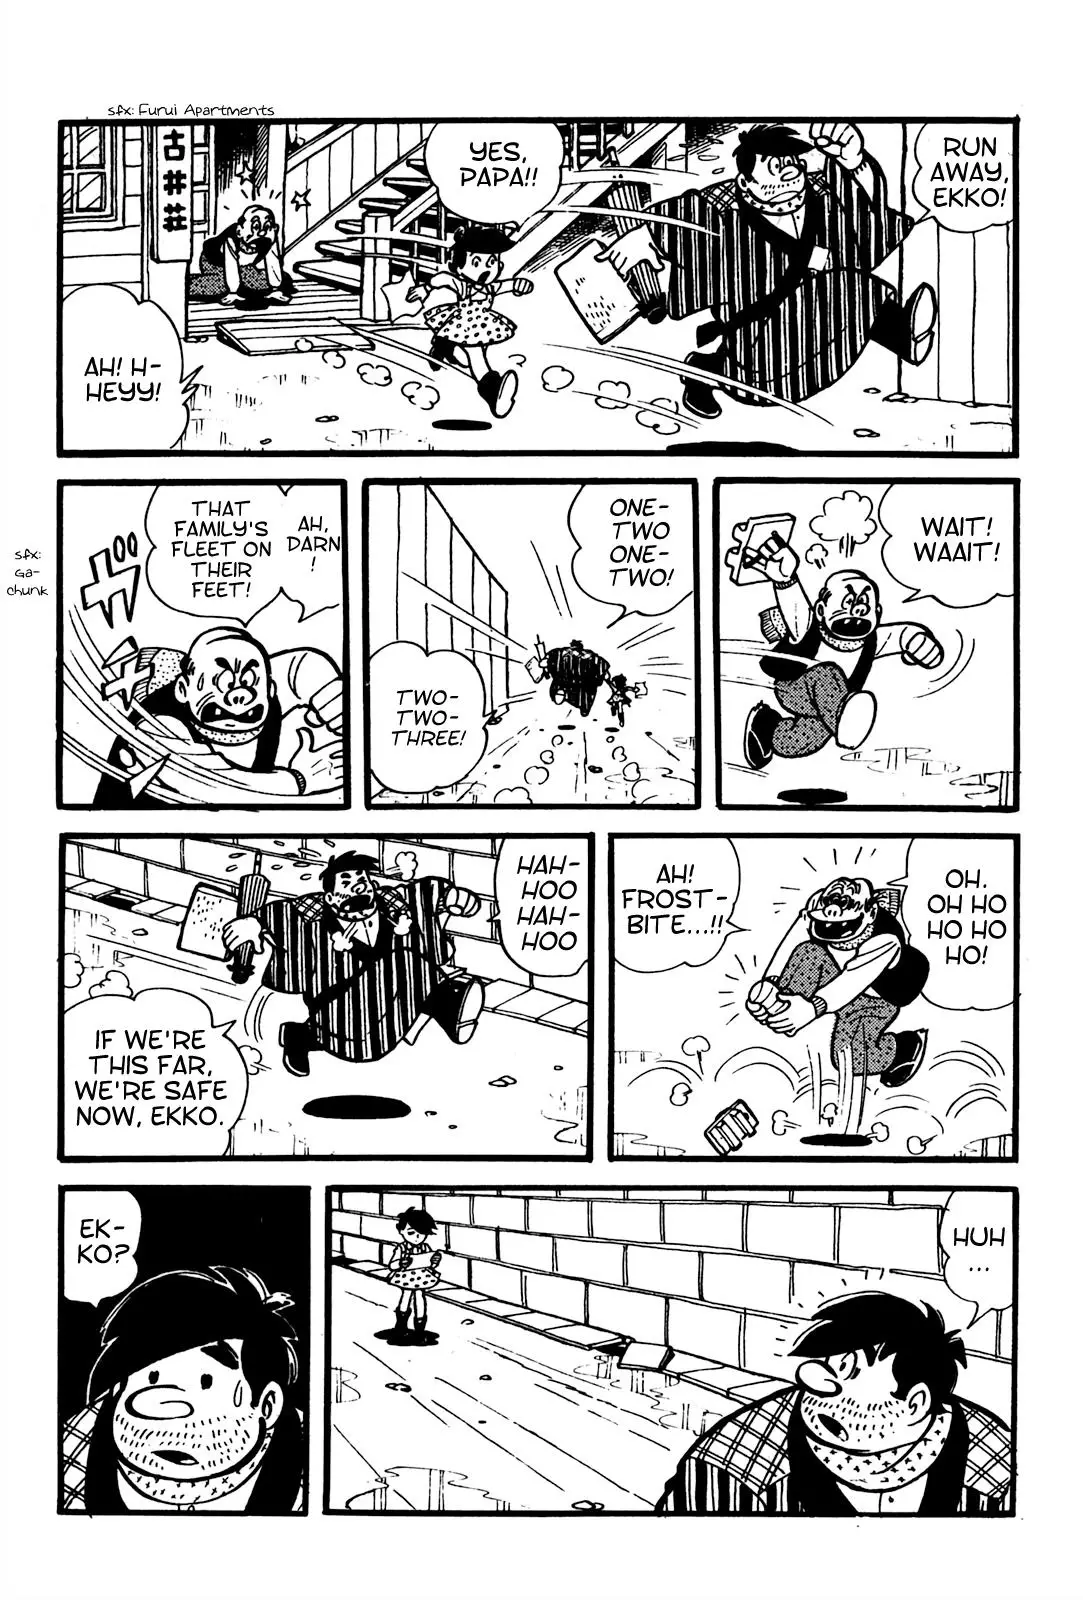 Tetsuya Chiba Short Stories - Shojo Manga - 2 page 8-0106abb1